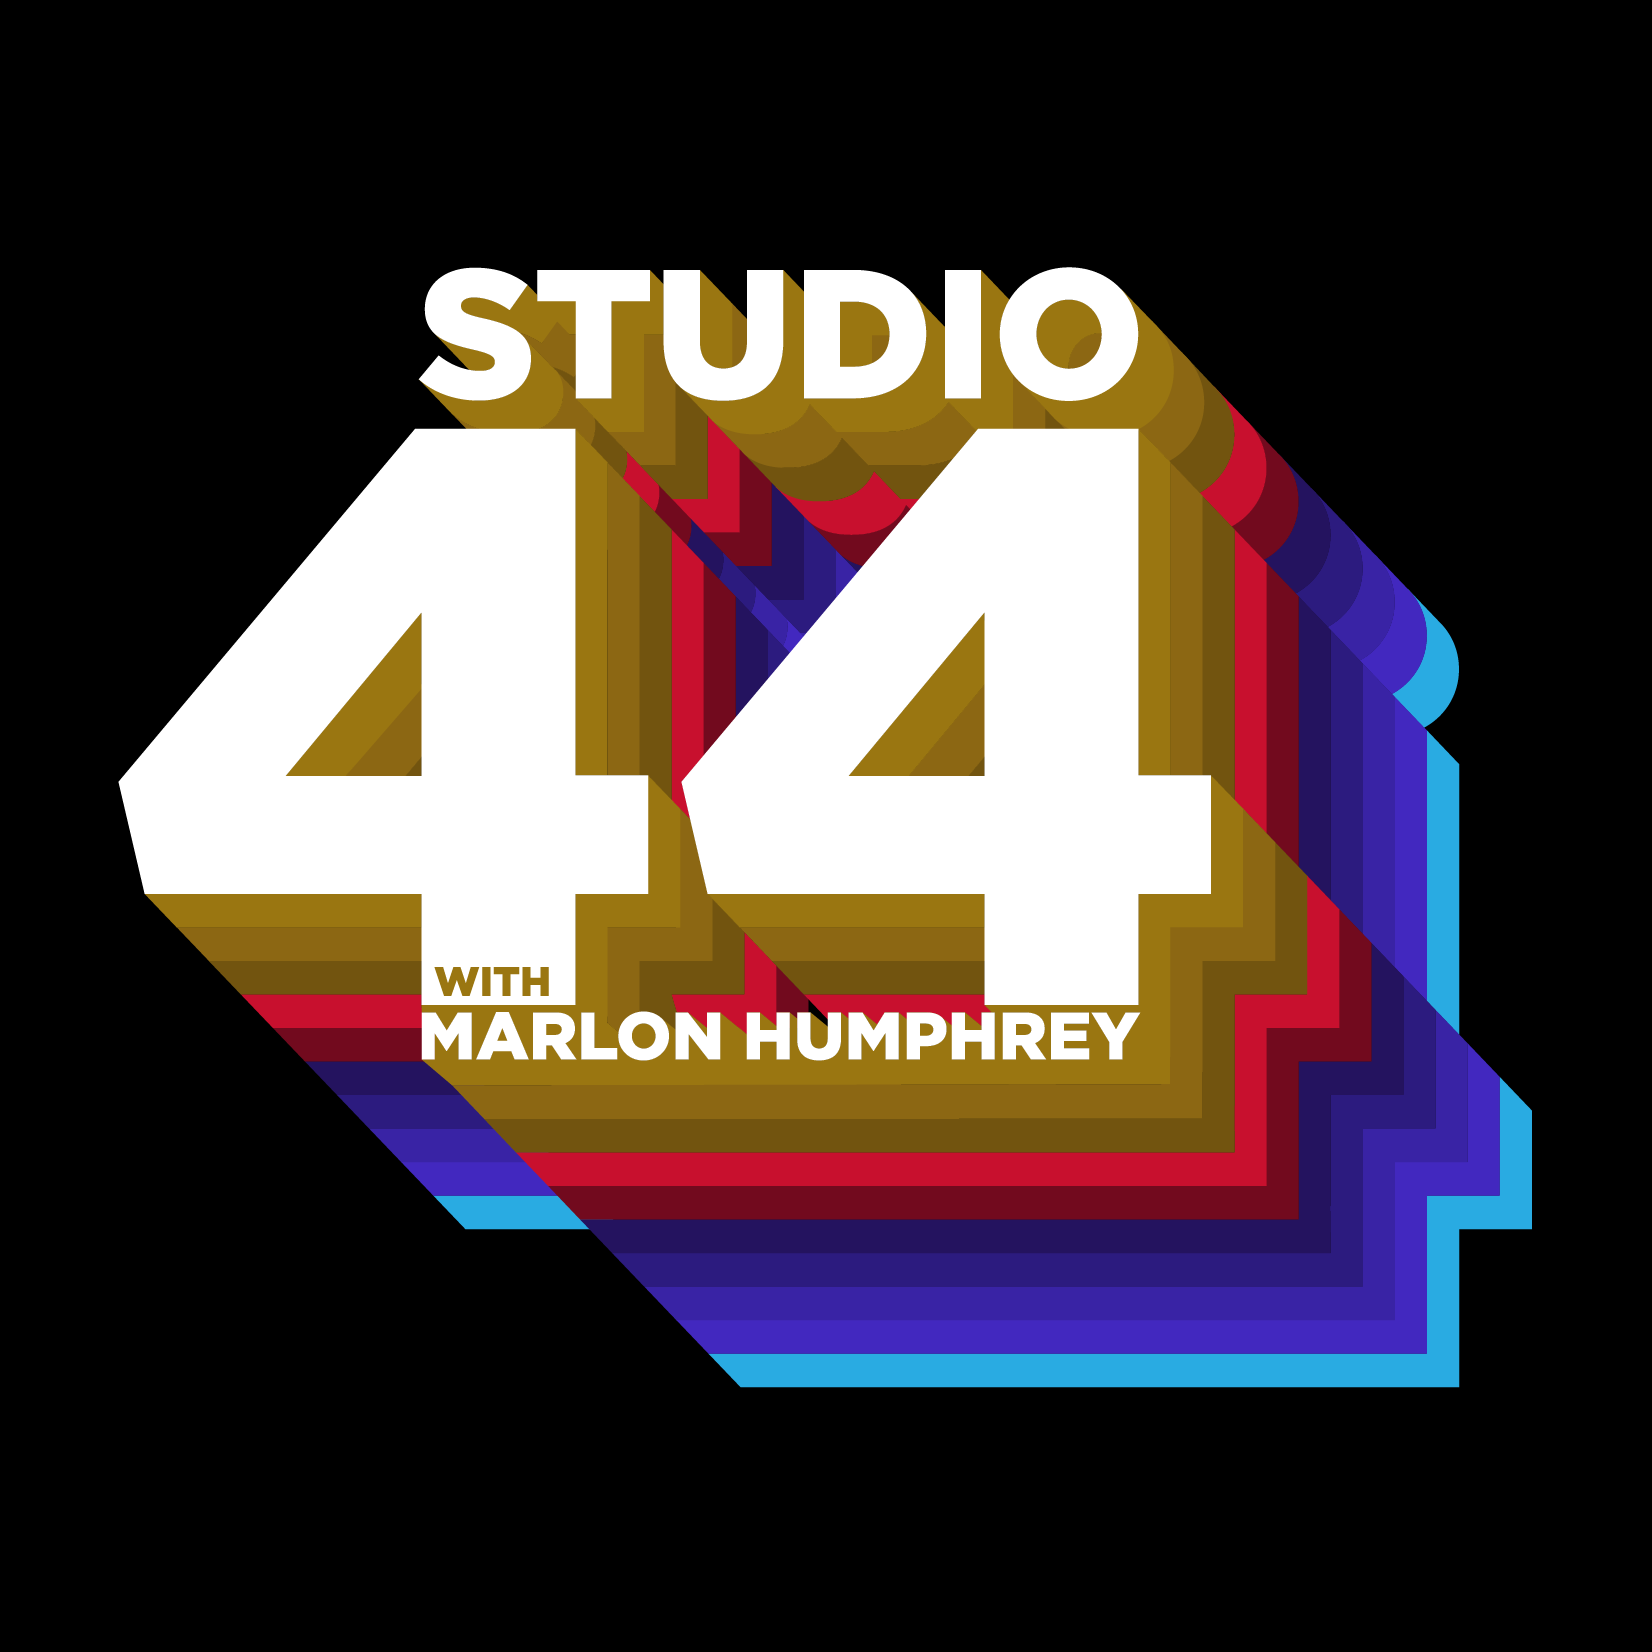 Studio 44, Ep. 4: Marlon Humphrey Welcomes Rashod Bateman